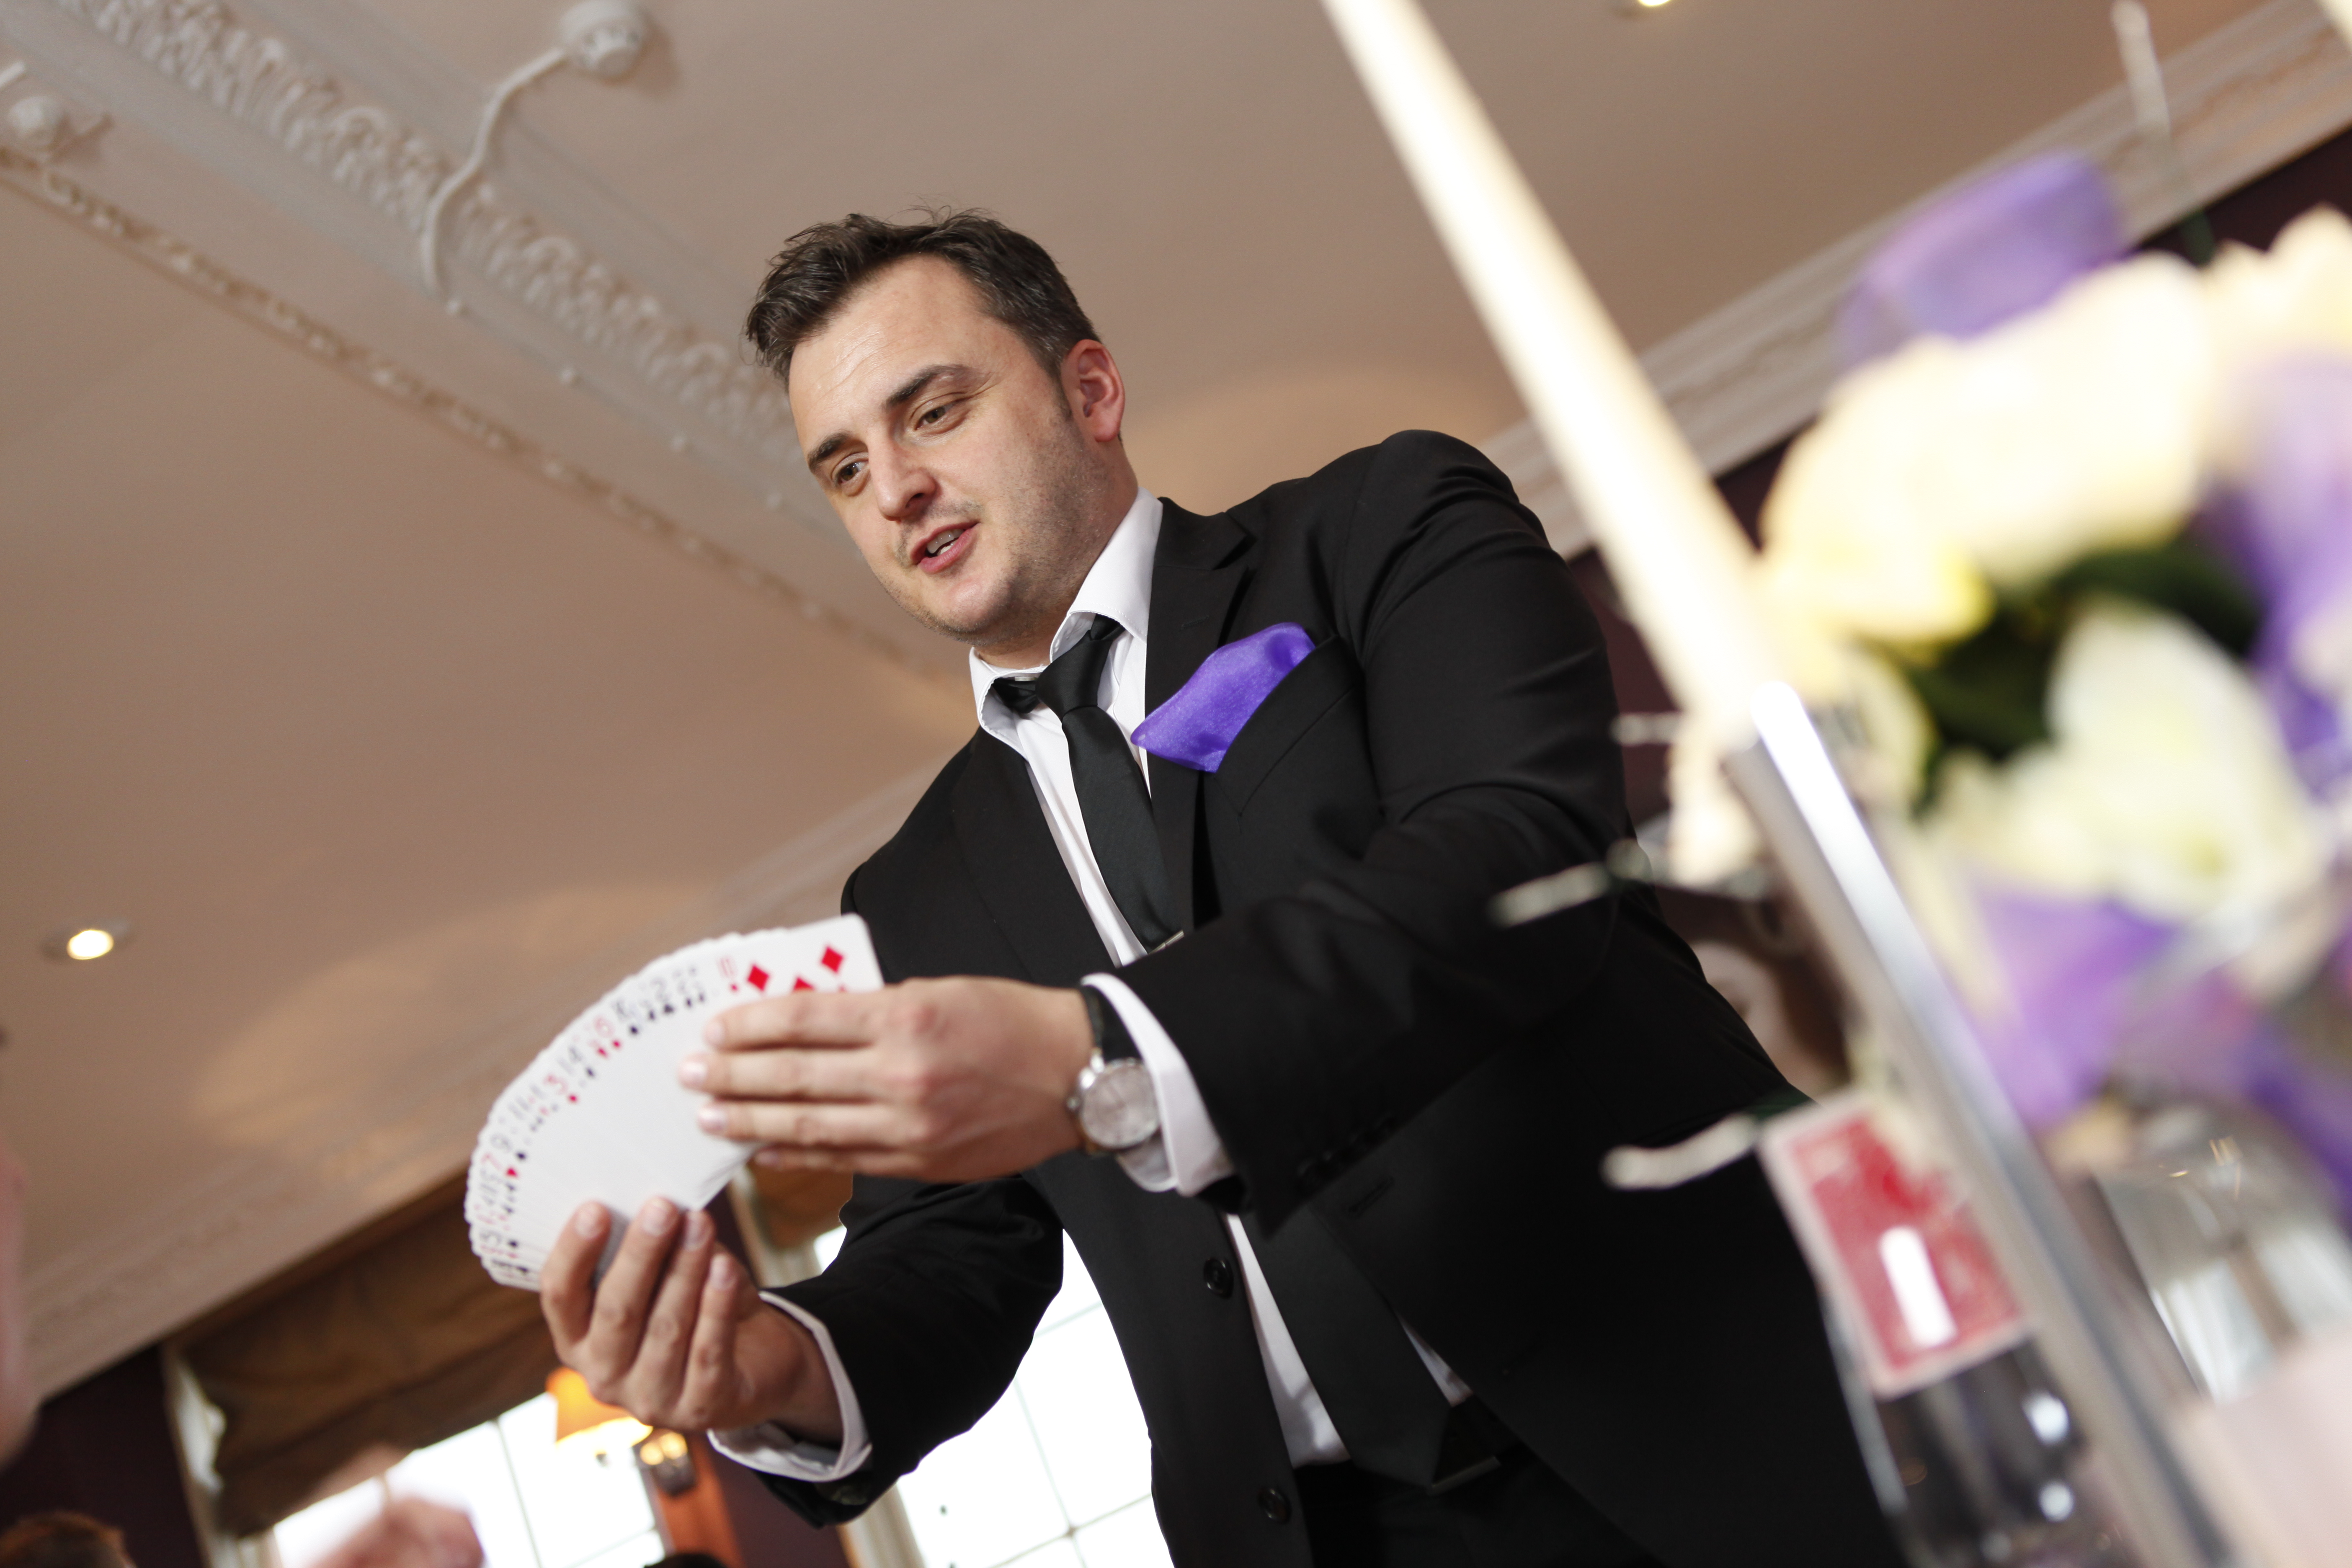 Ever seen a magician at a wedding?